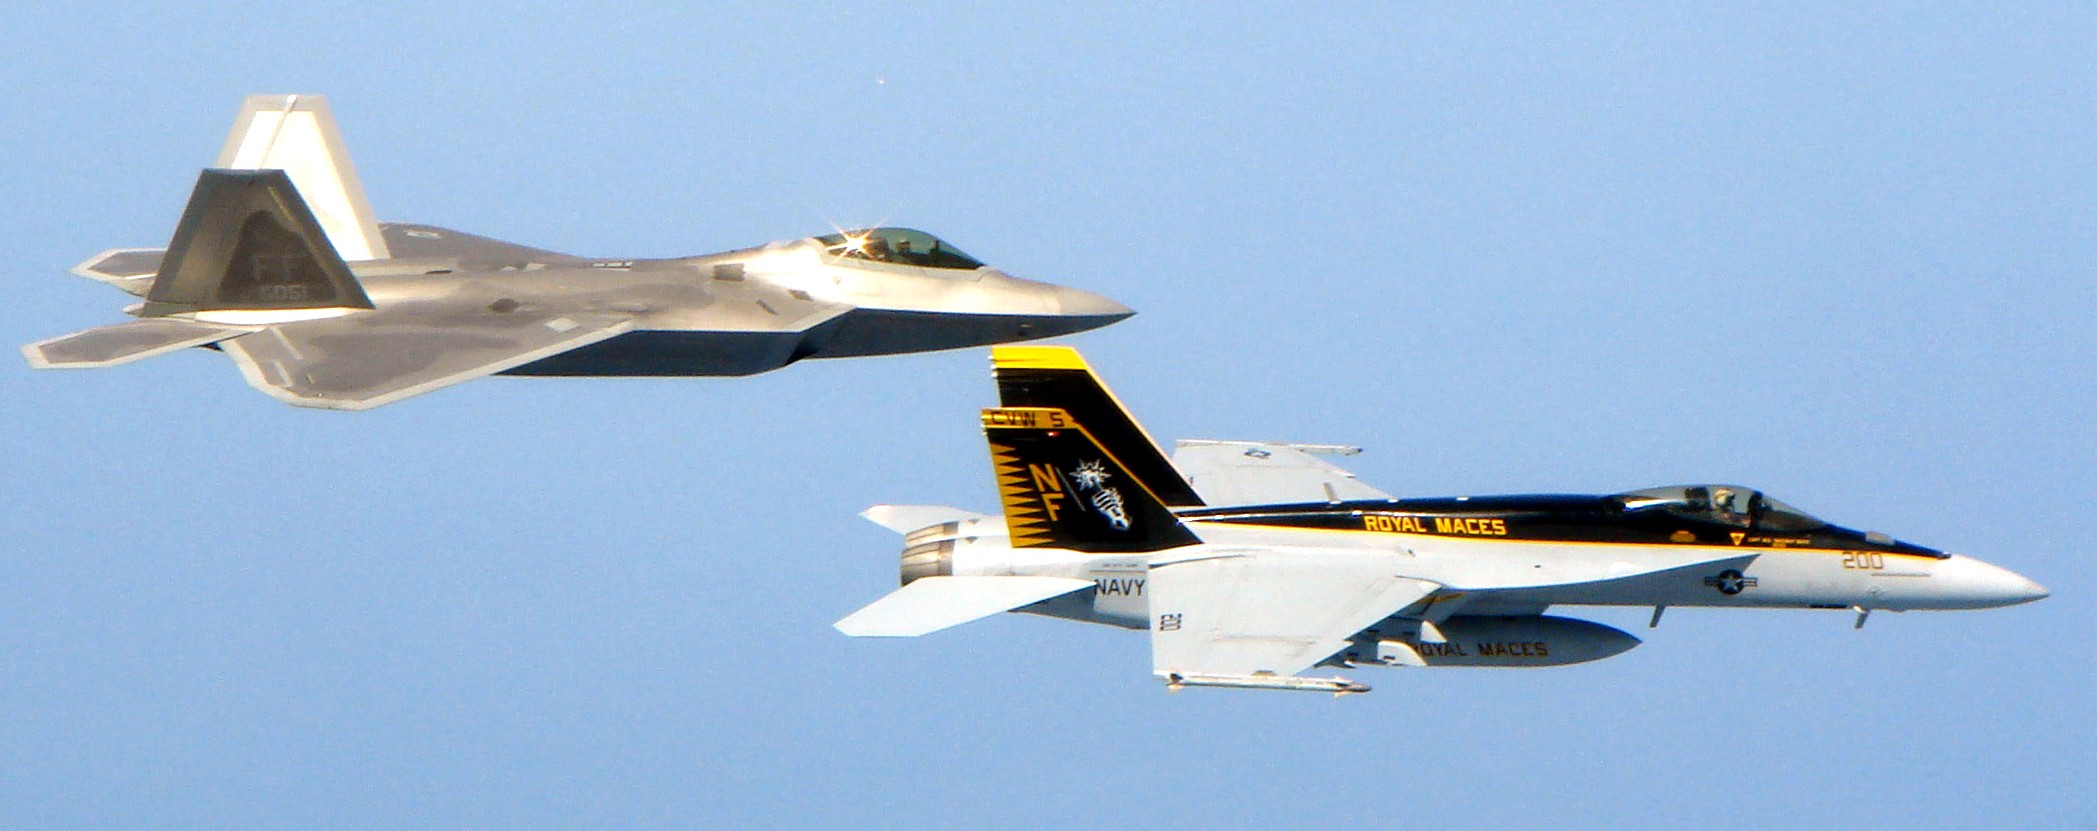 vfa-27 royal maces strike fighter squadron f/a-18e super hornet cv-63 uss kitty hawk cvw-5 us navy 171 usaf f-22 raptor